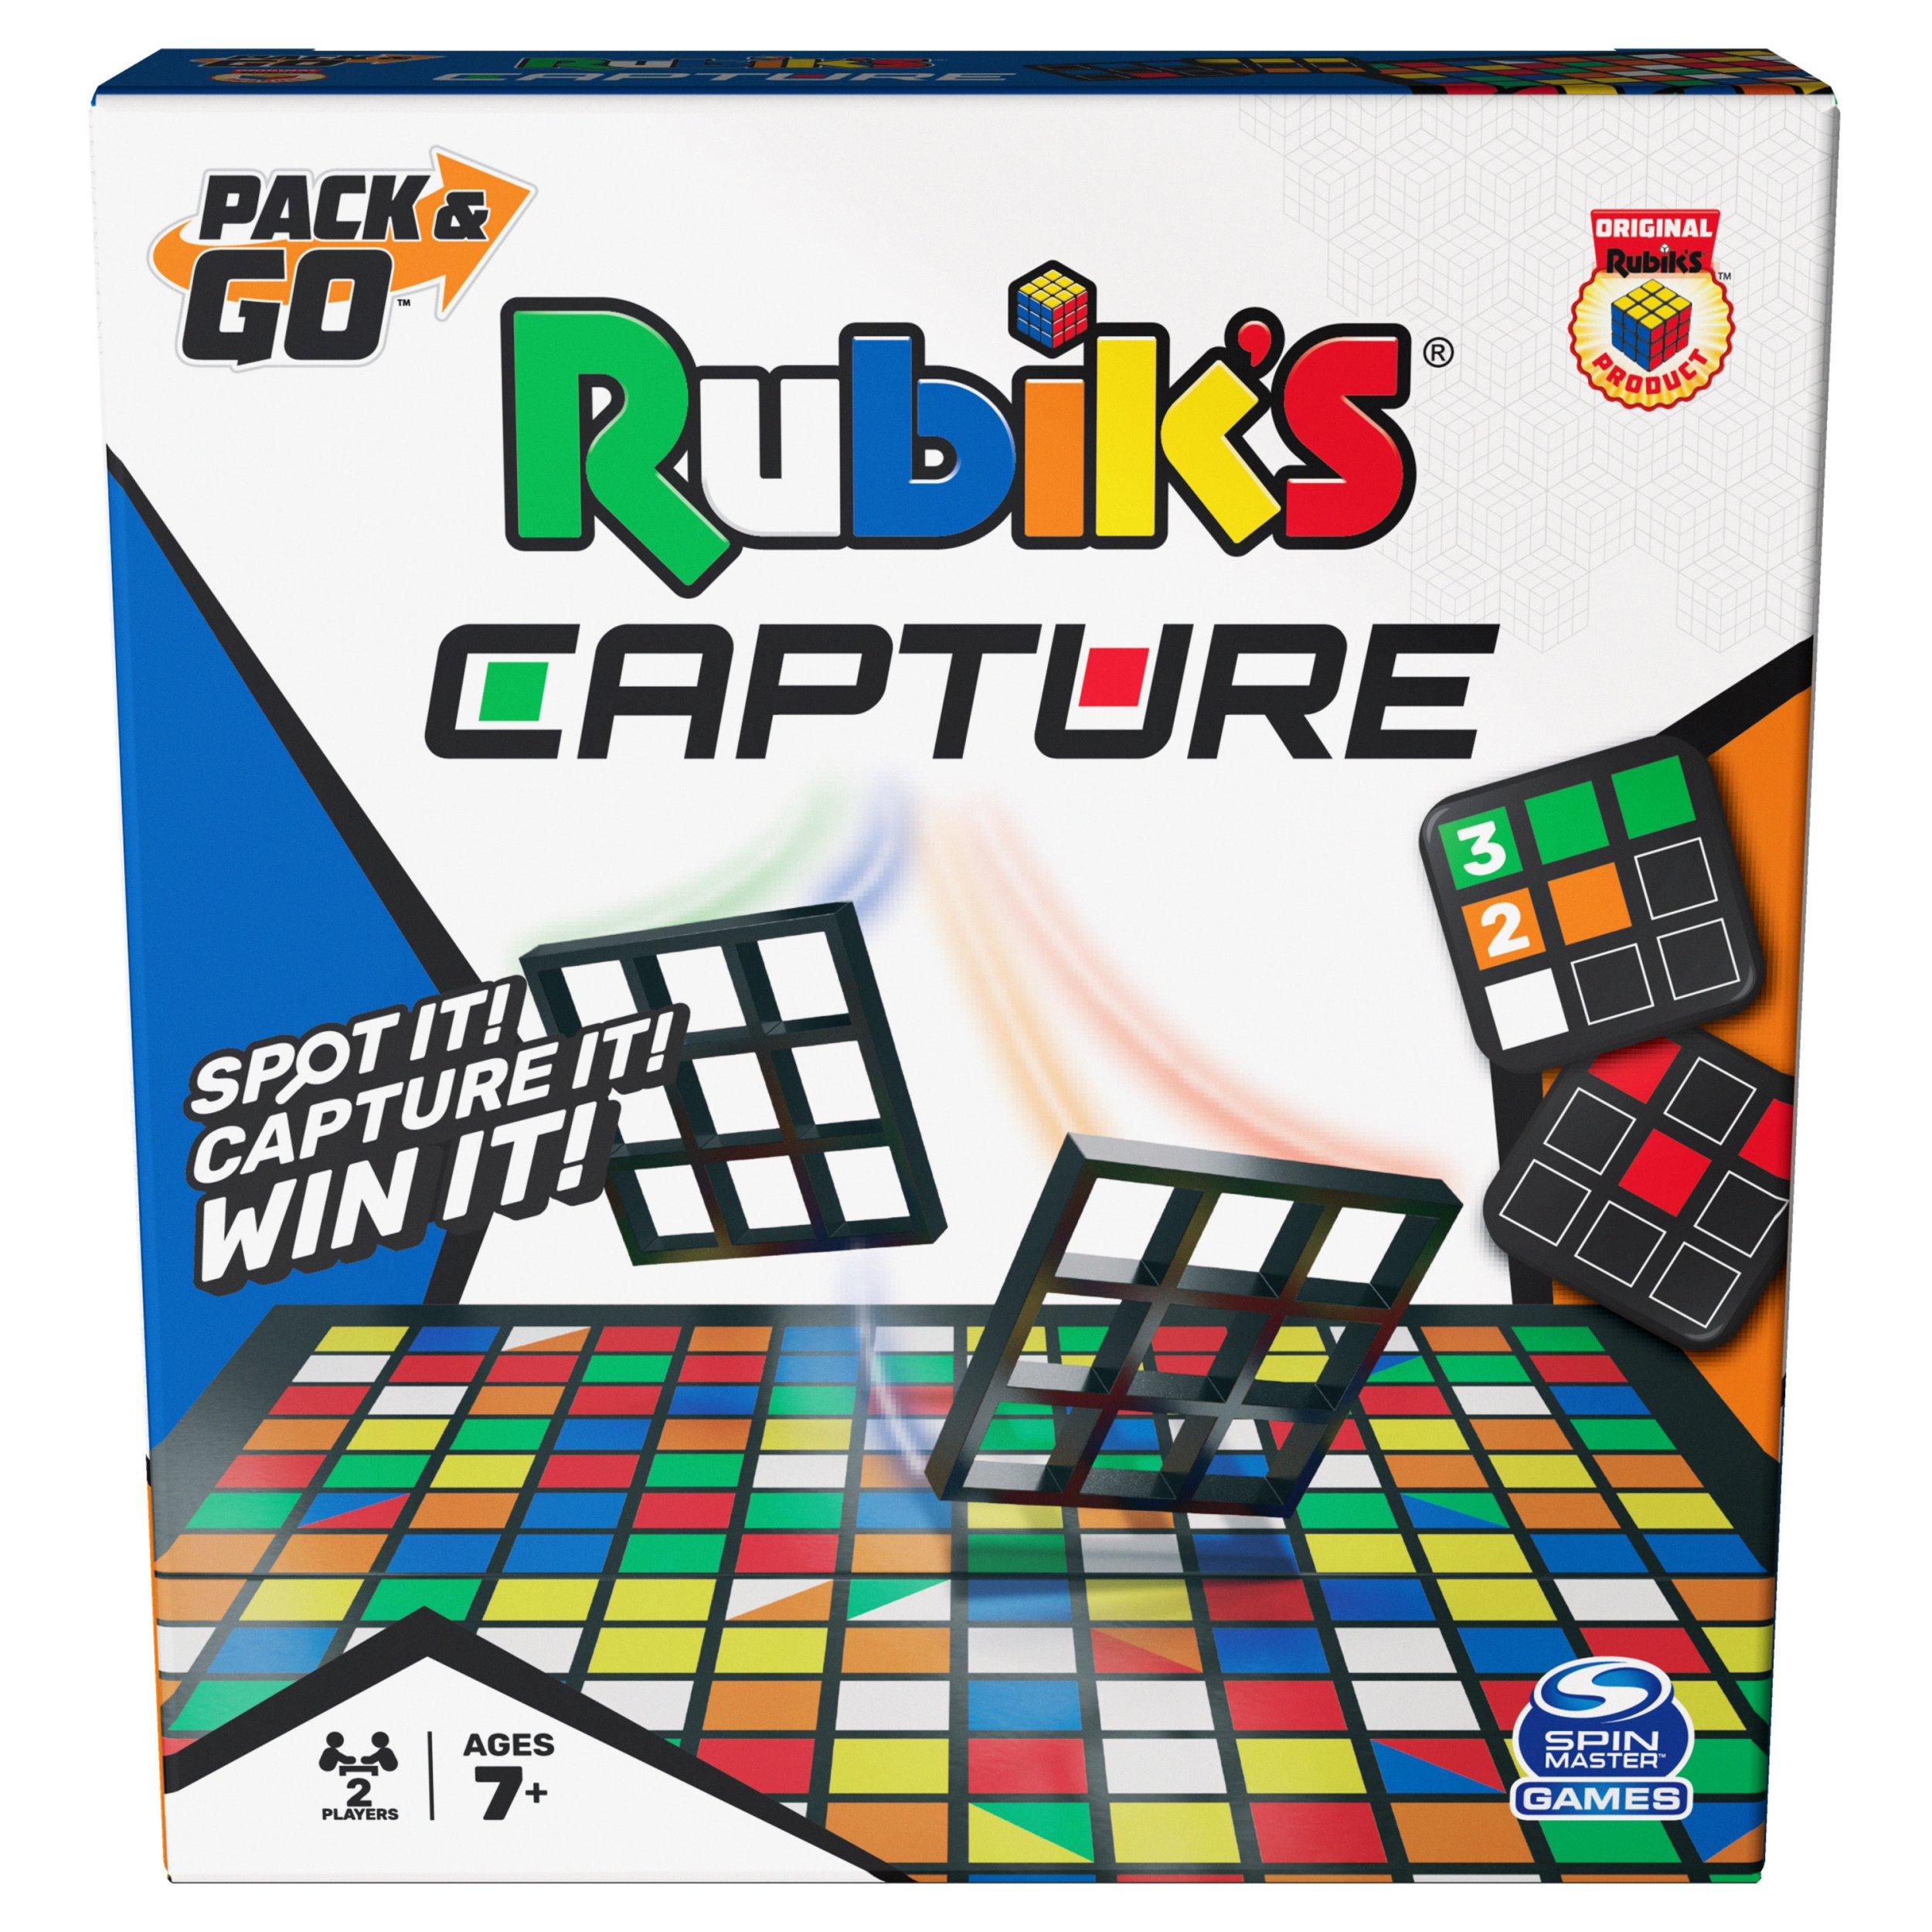 Rubik's Race Game - Entertainment Earth